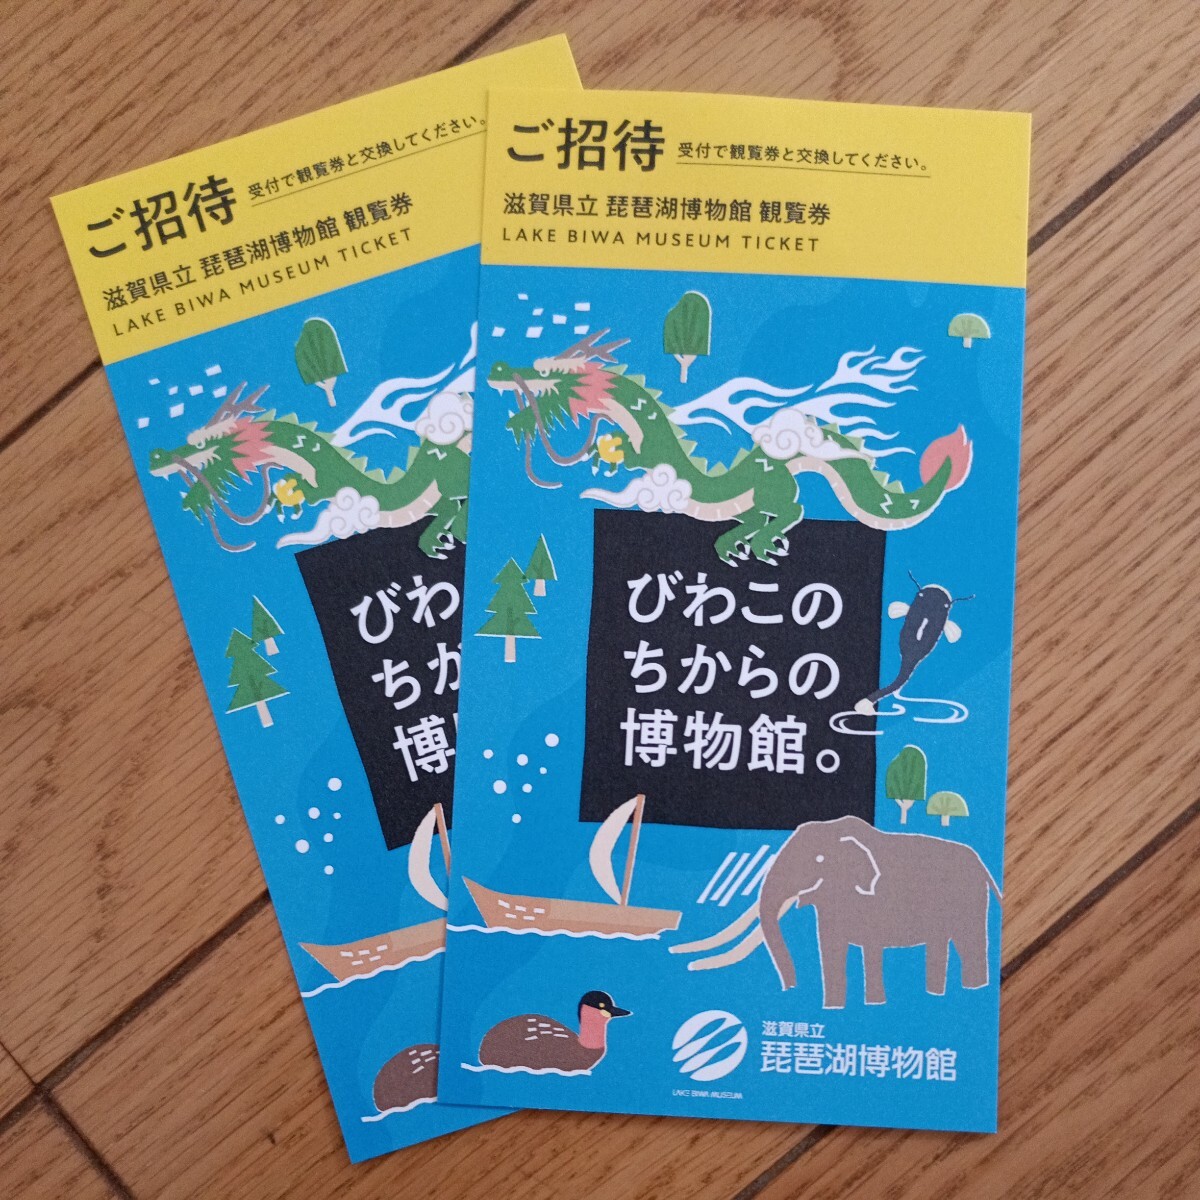  Shiga префектура . Biwa-ko музей приглашение талон пара 2 листов просмотр талон билет 